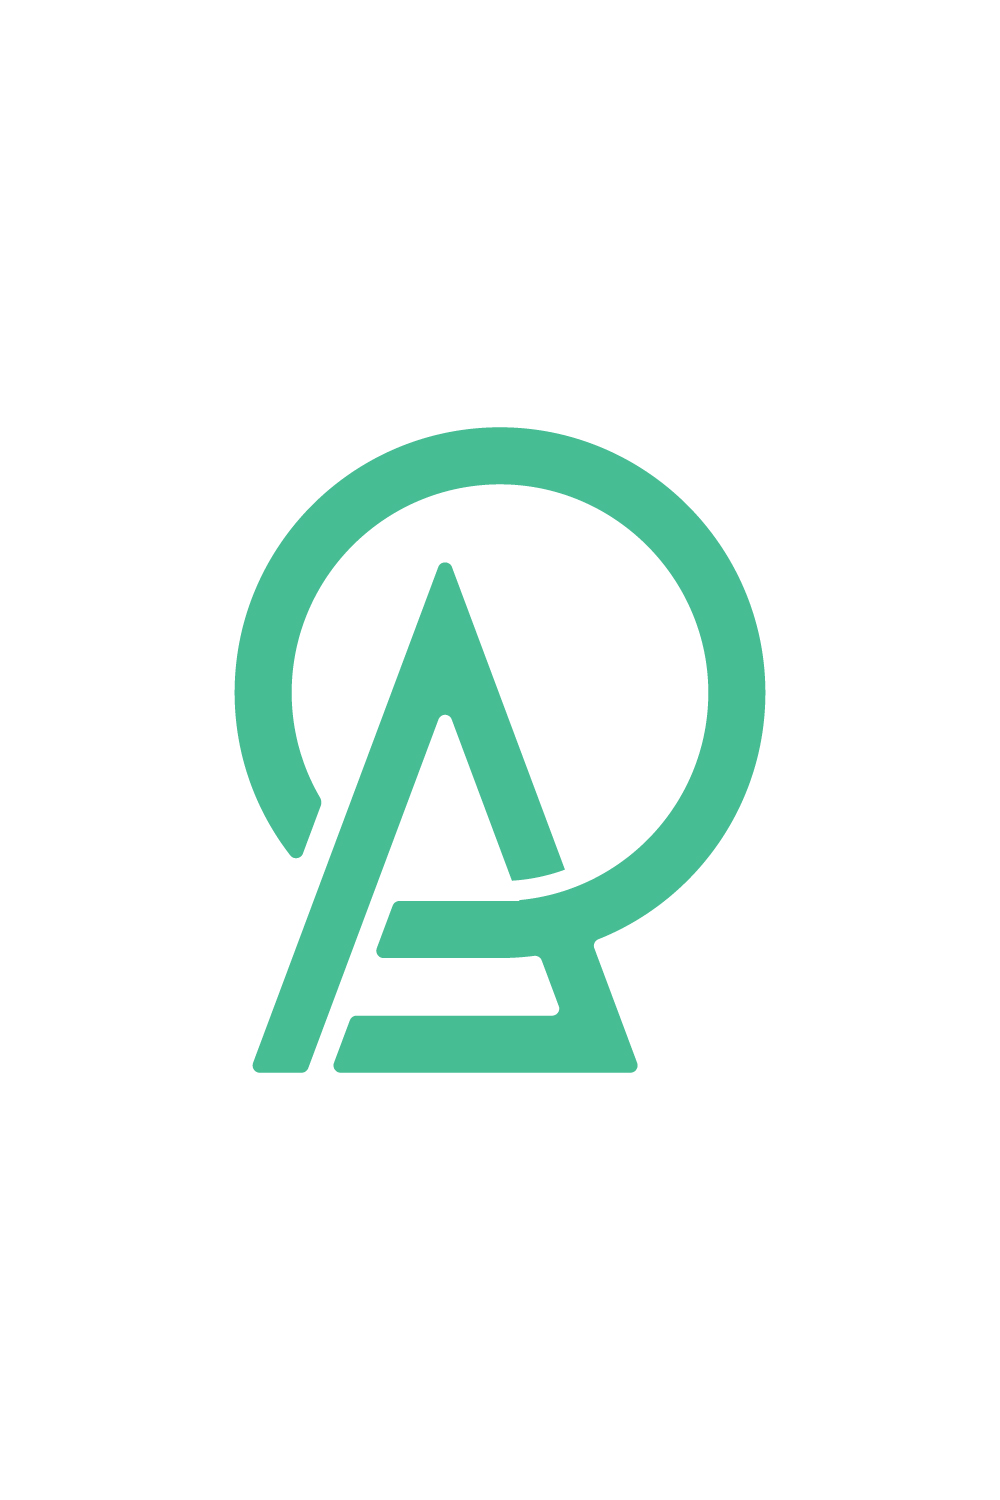 A letter logo pinterest preview image.